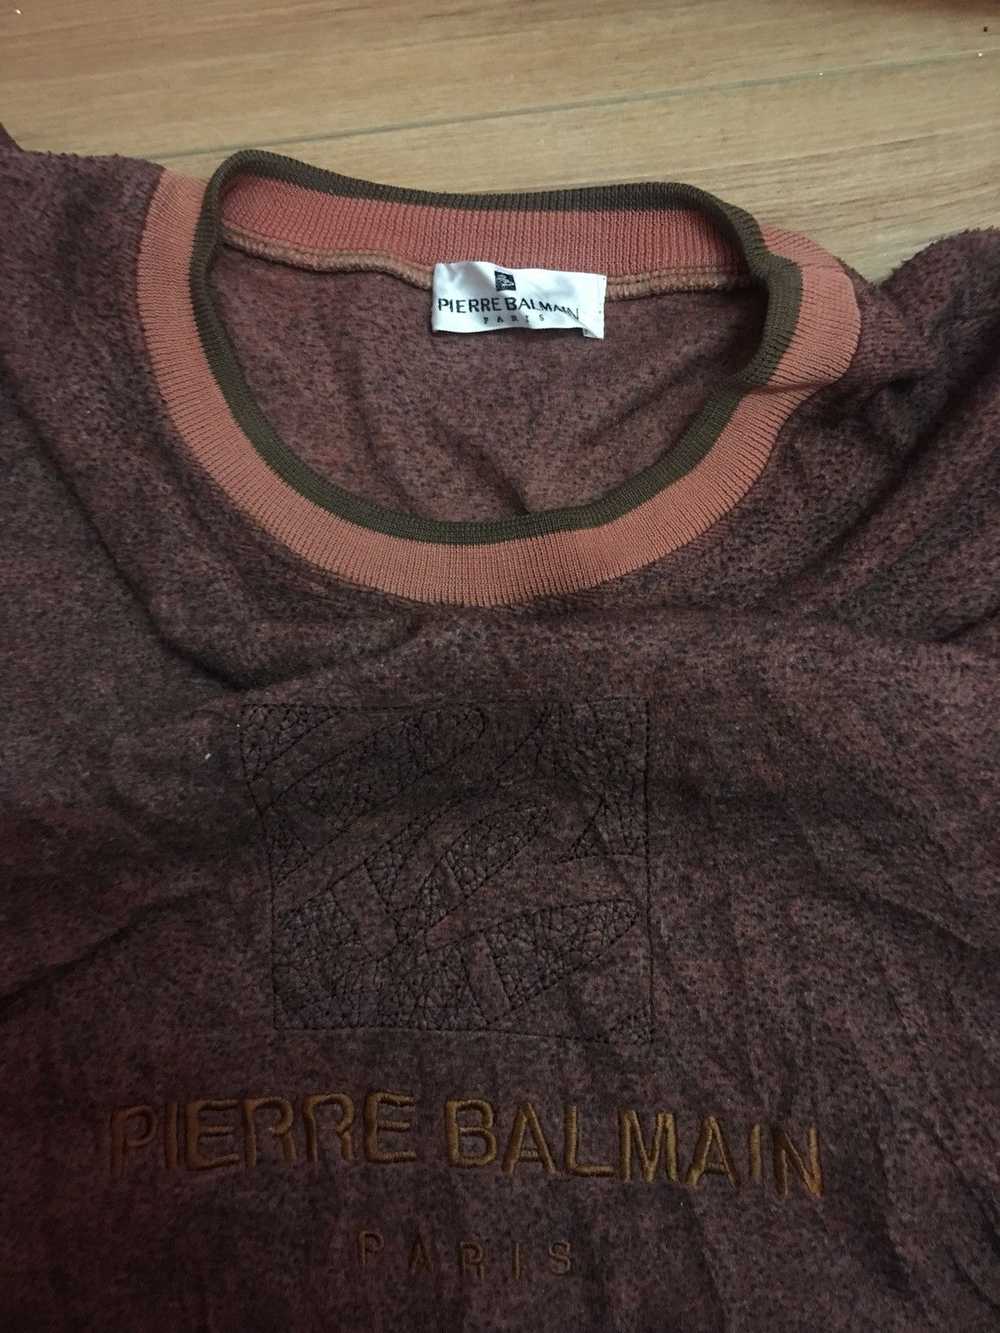 Rare Sweatshirt Pierre Balmain Paris - image 4